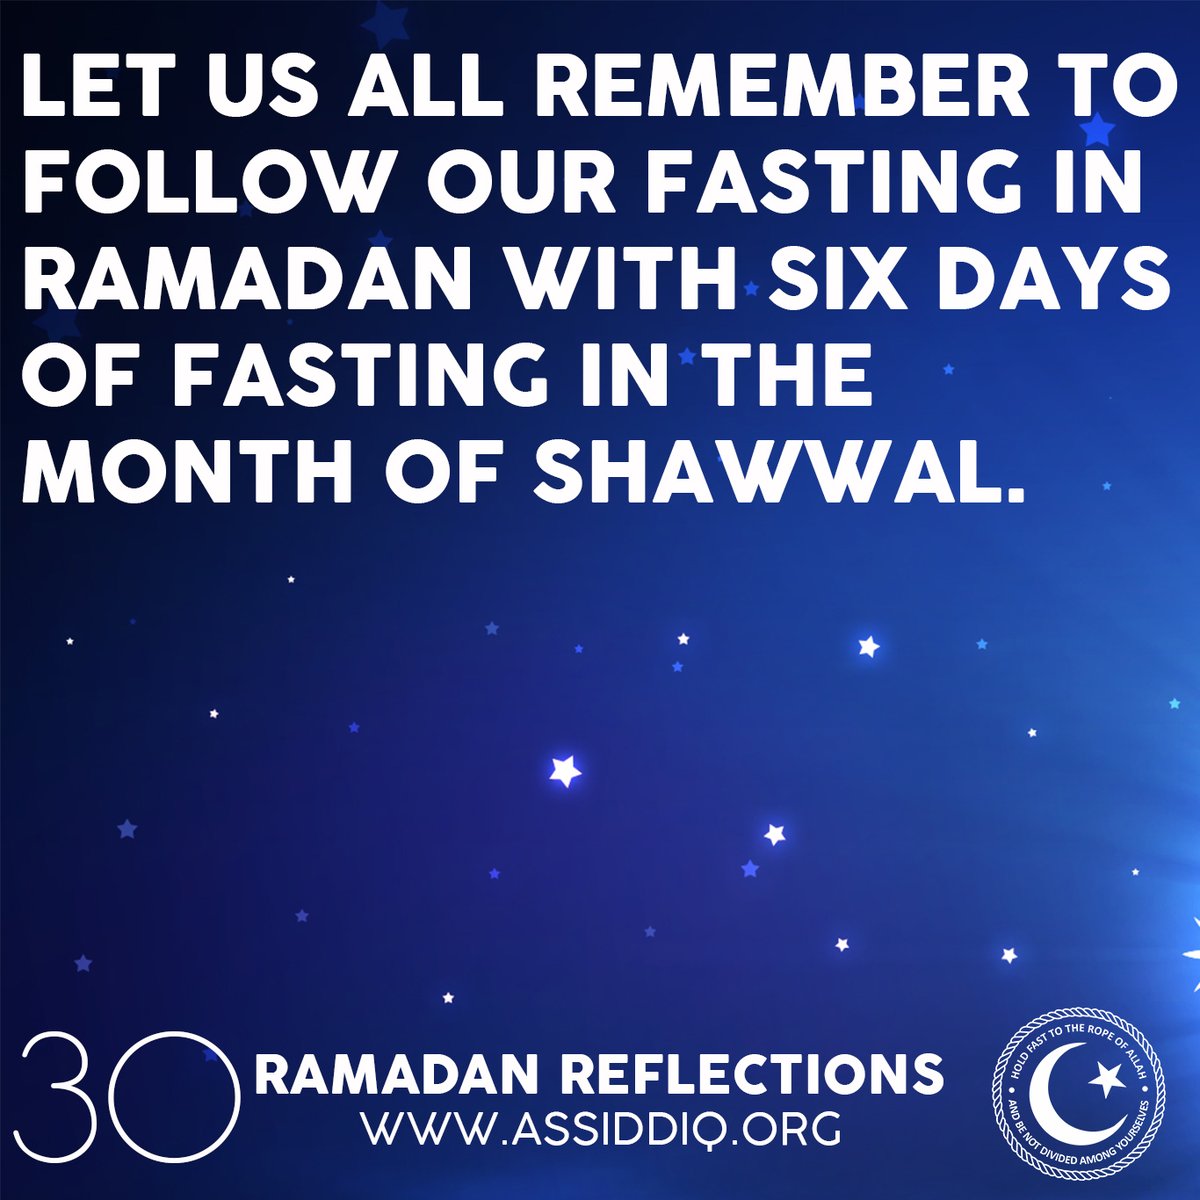 #RamadanReflections #AsSiddiqMasjid assiddiq.org